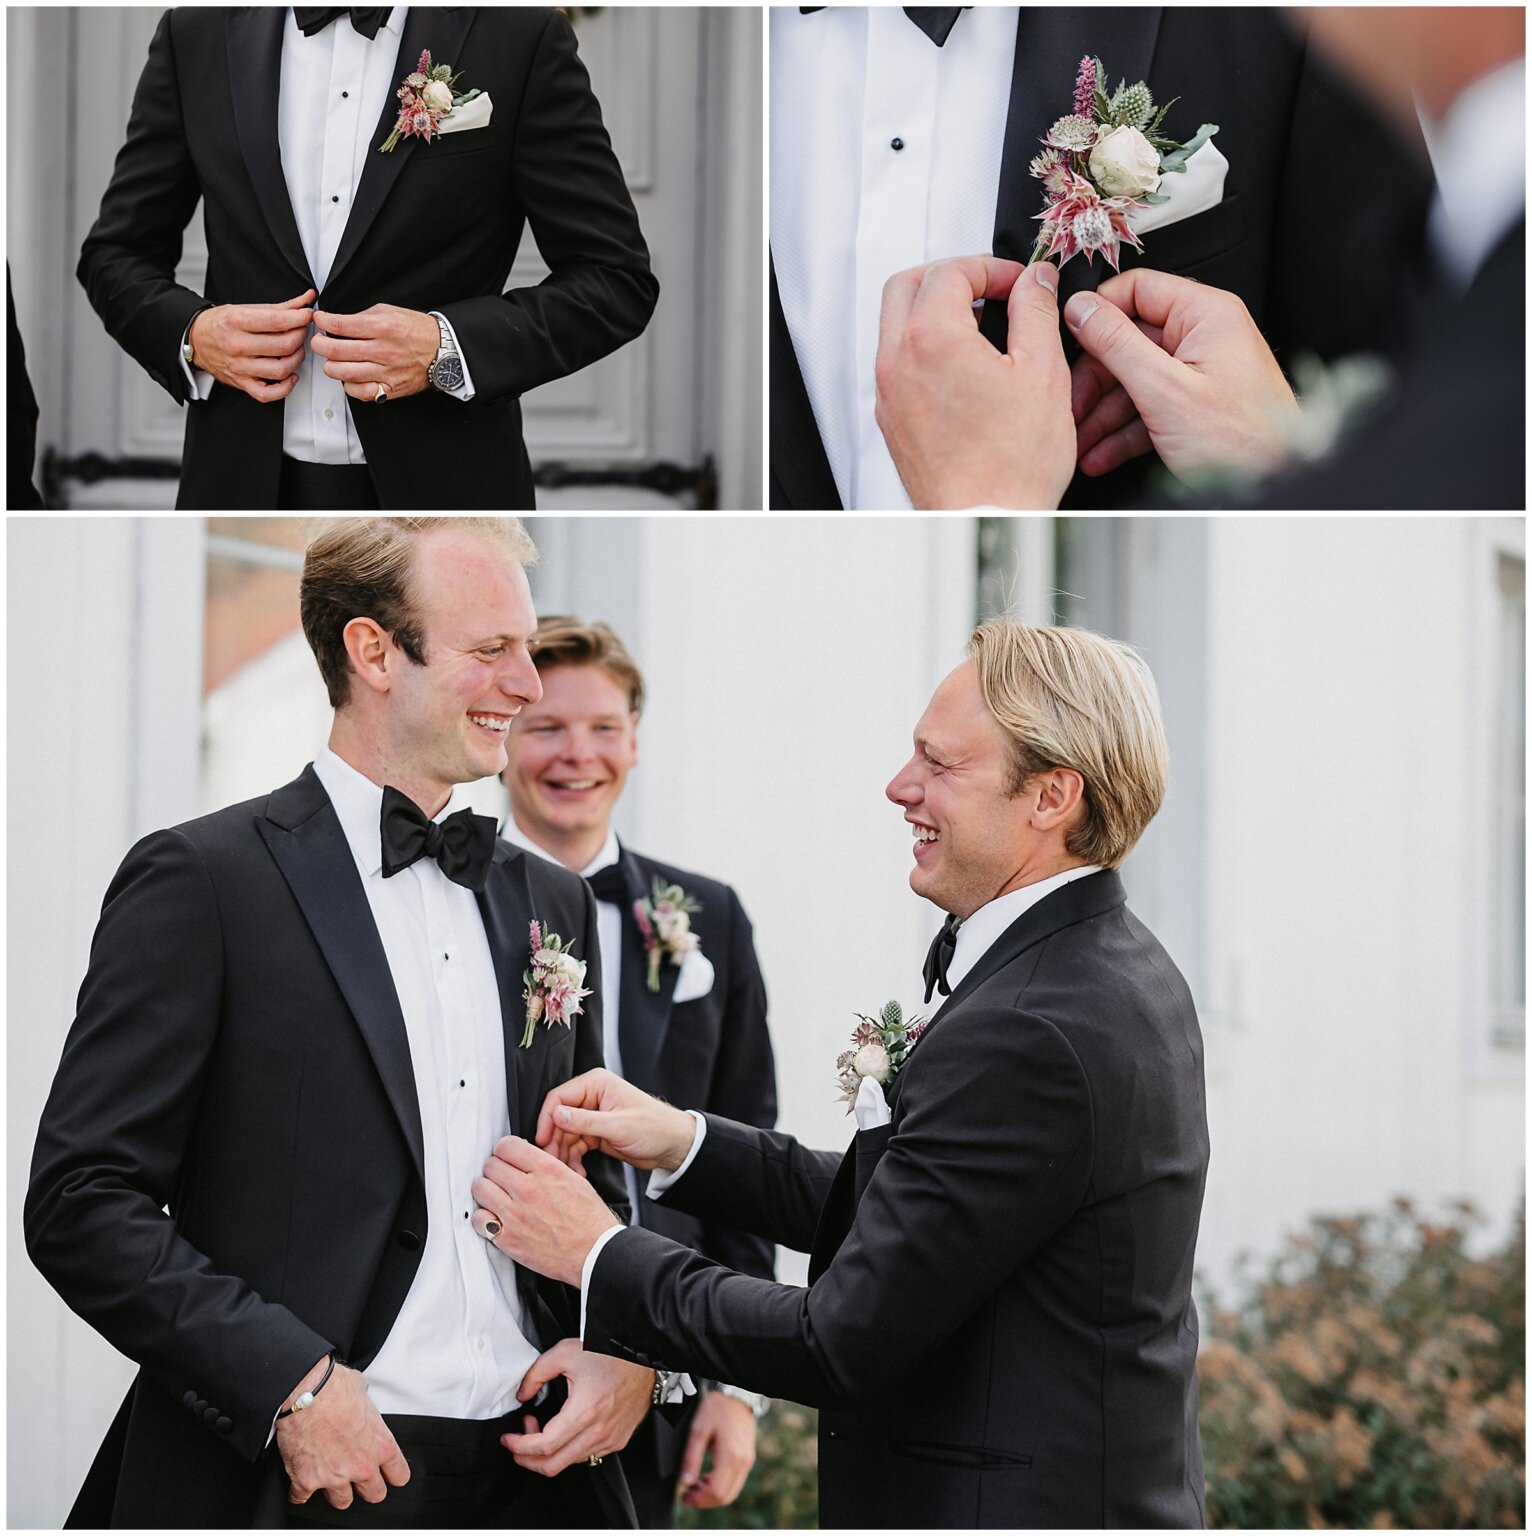 Elegant August Wedding with Bohemian Details and Swedish Food Traditions:  Yvette + Fredrik